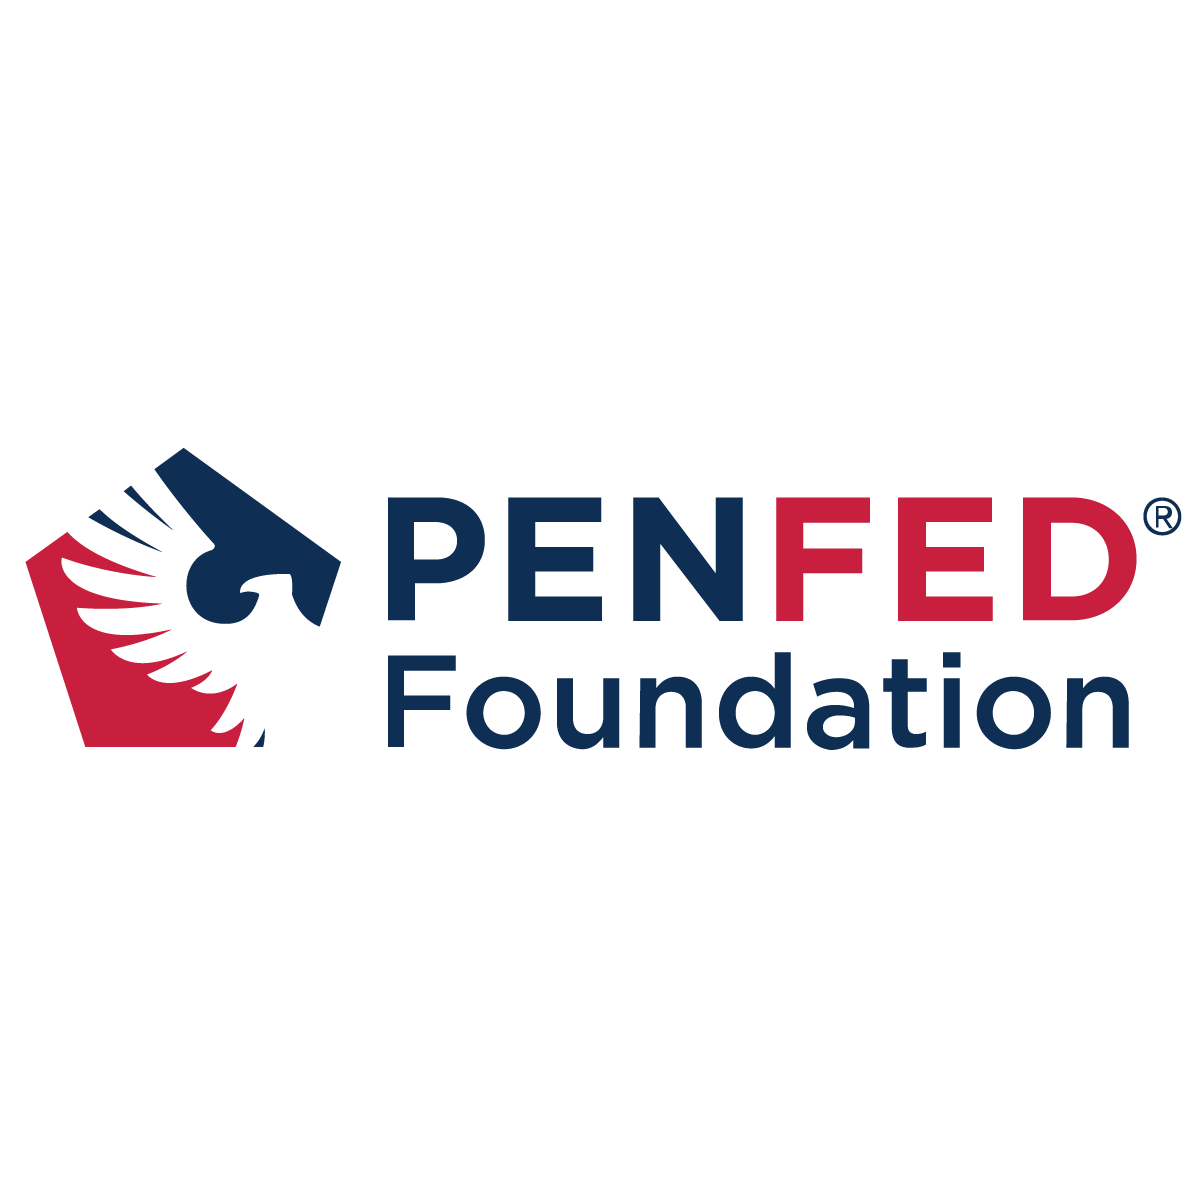 PenFed Foundation